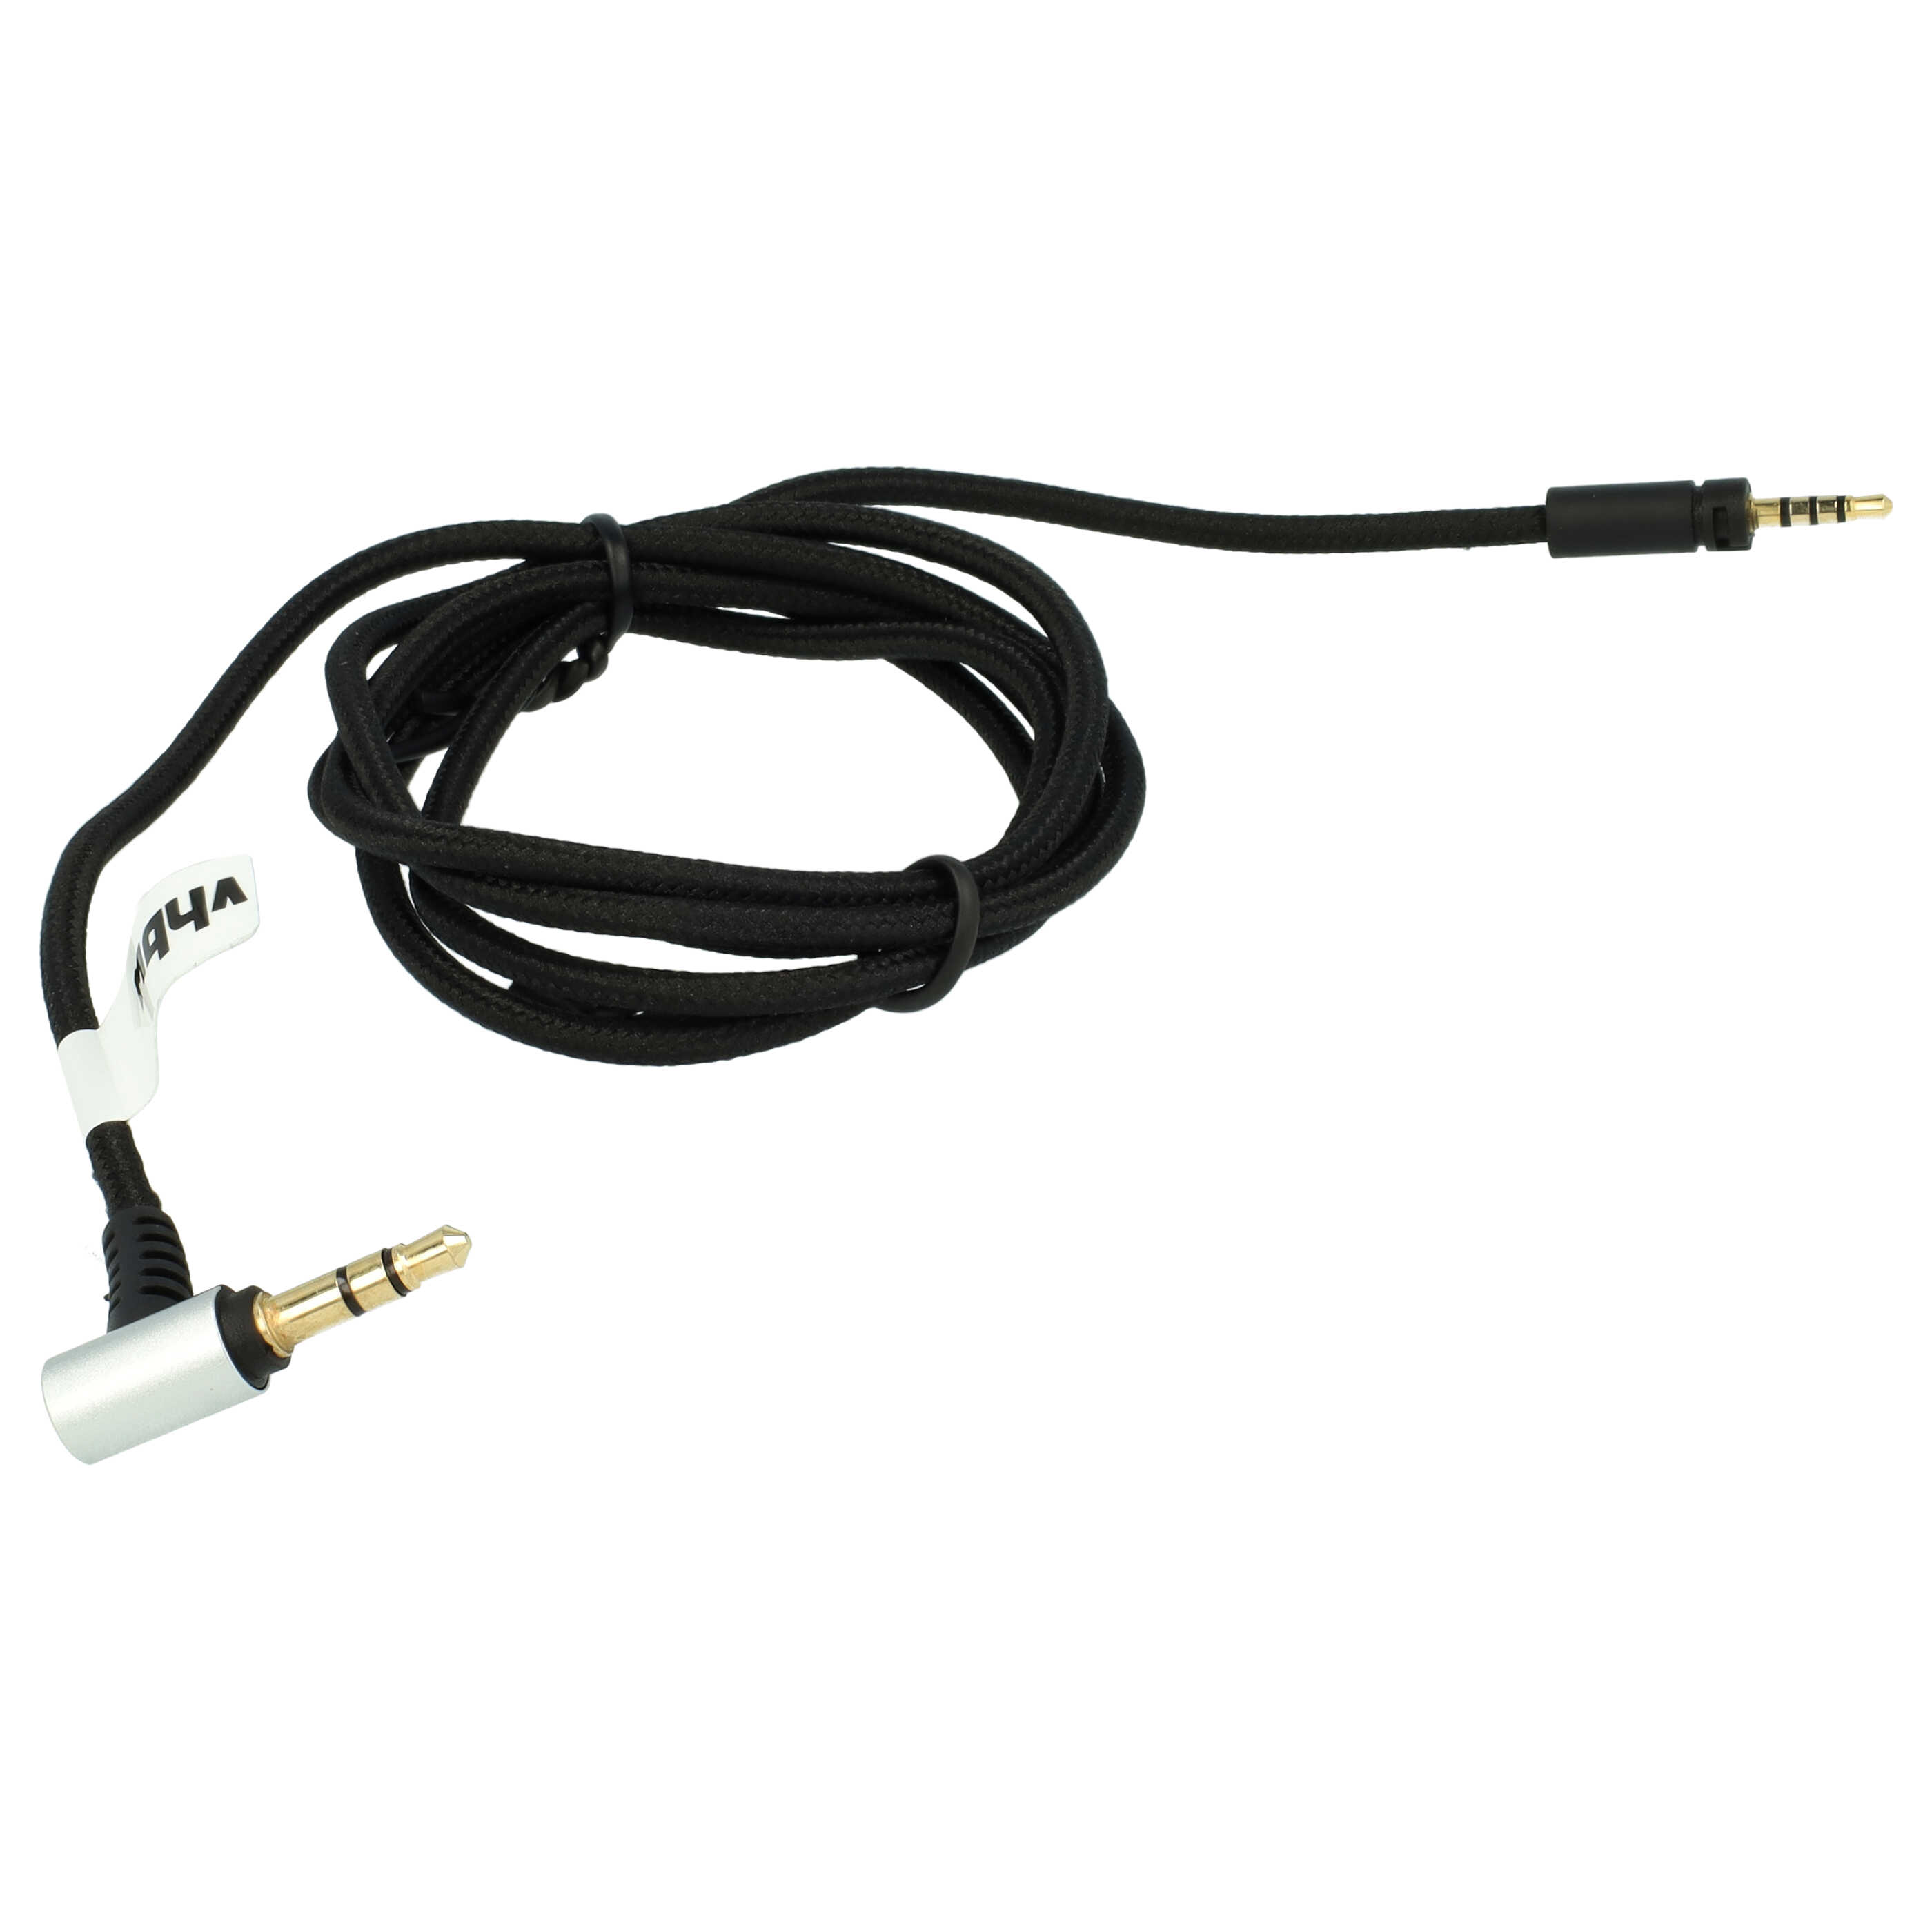 Kabel do słuchawek Sennheiser zamiennik Sennheiser 564549 - czarny, 120 cm